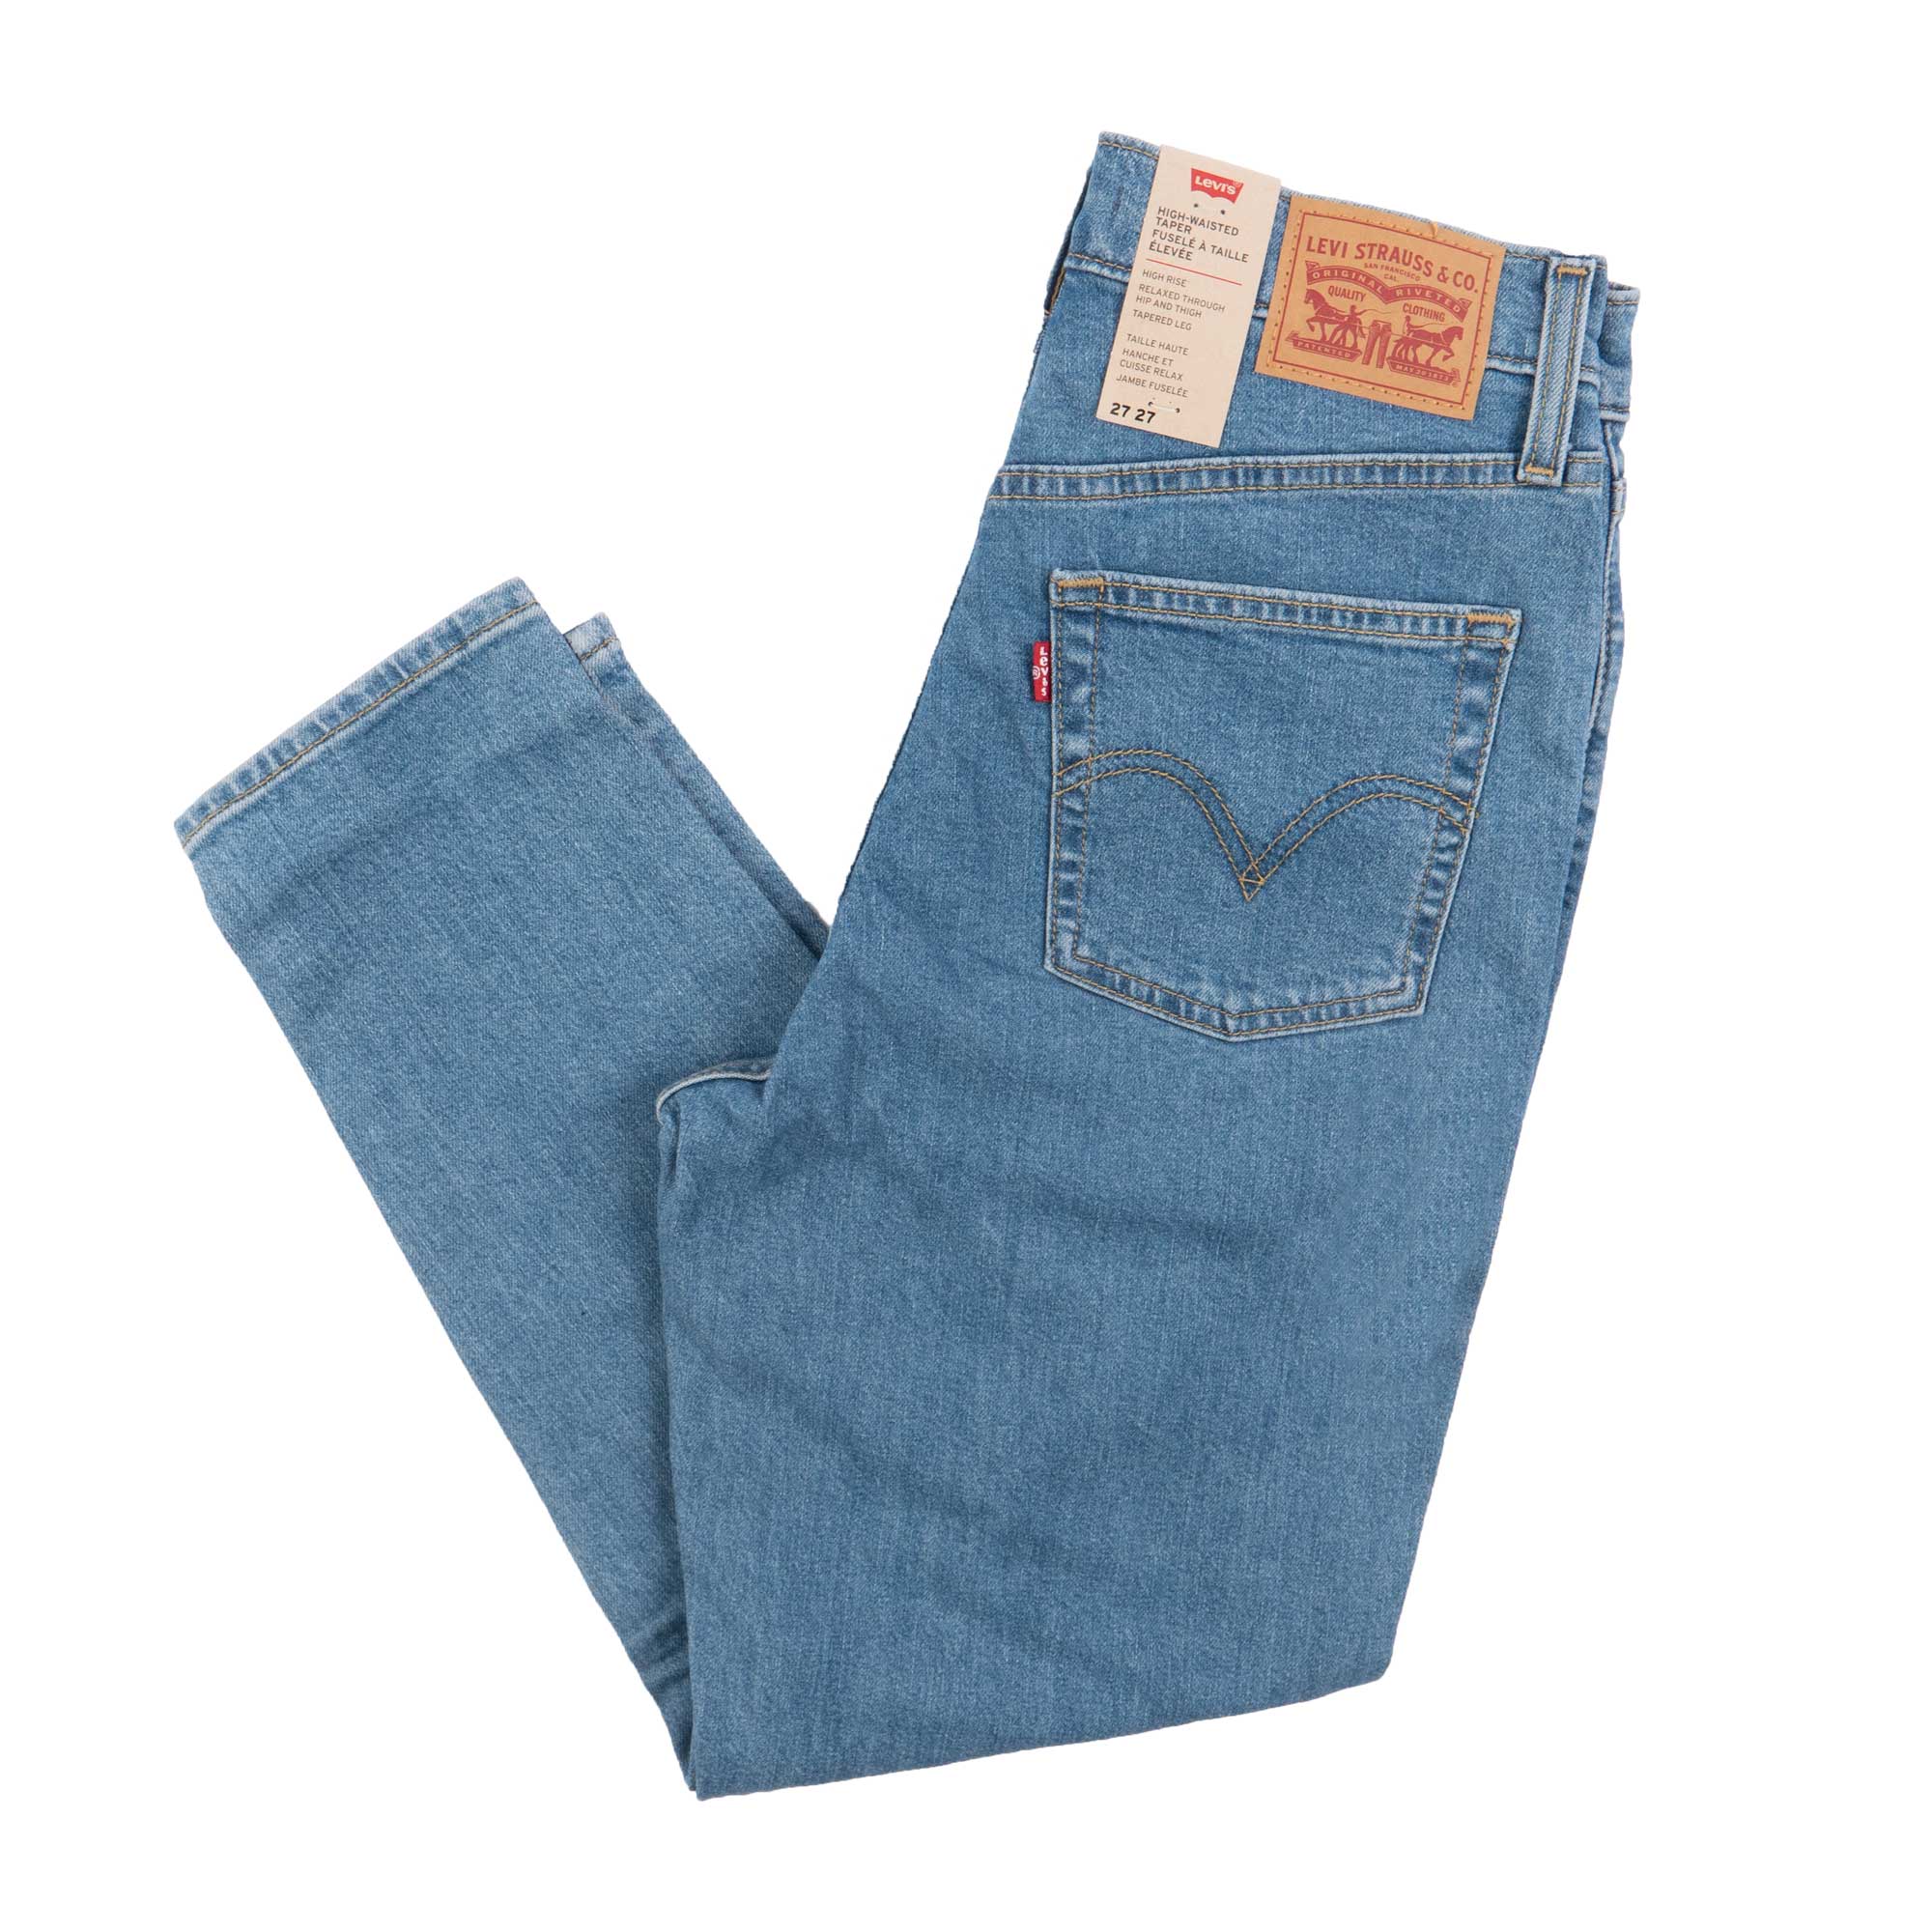 Levi's Original Women's High-Waisted Mom Jeans 